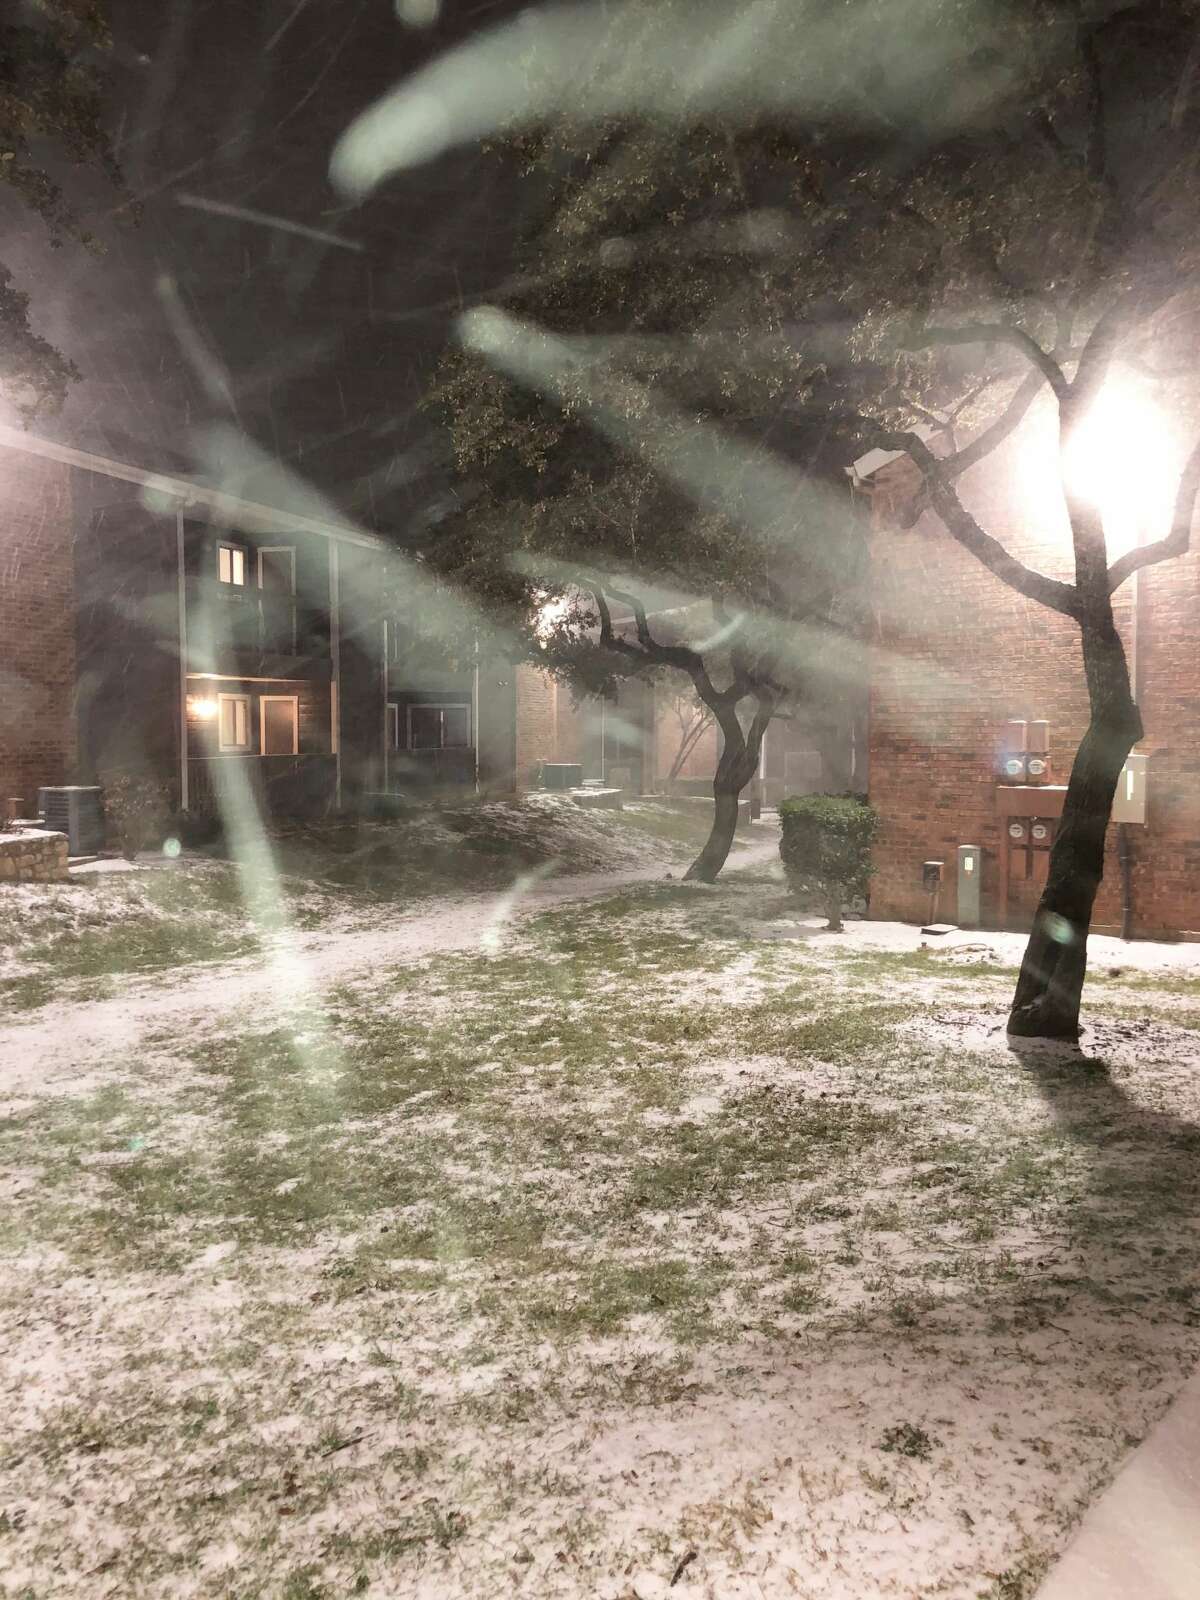 Snow falls at a North Side San Antonio apartment complex Sunday night, Feb. 14, 2021.